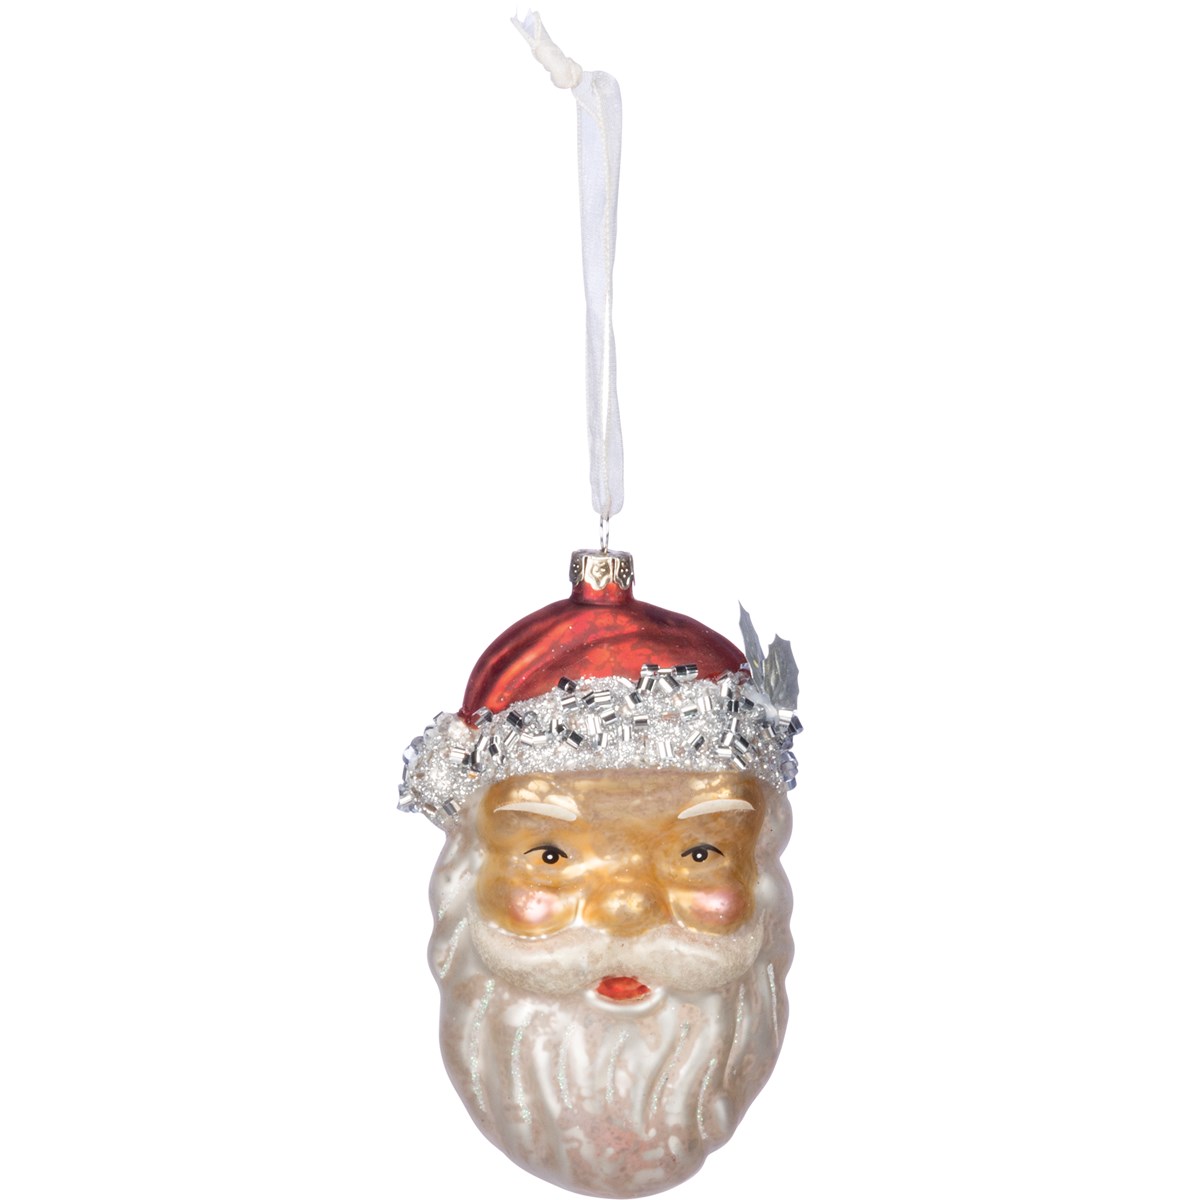 Santa Face Glass Ornament - Glass, Metal, Ribbon, Glitter